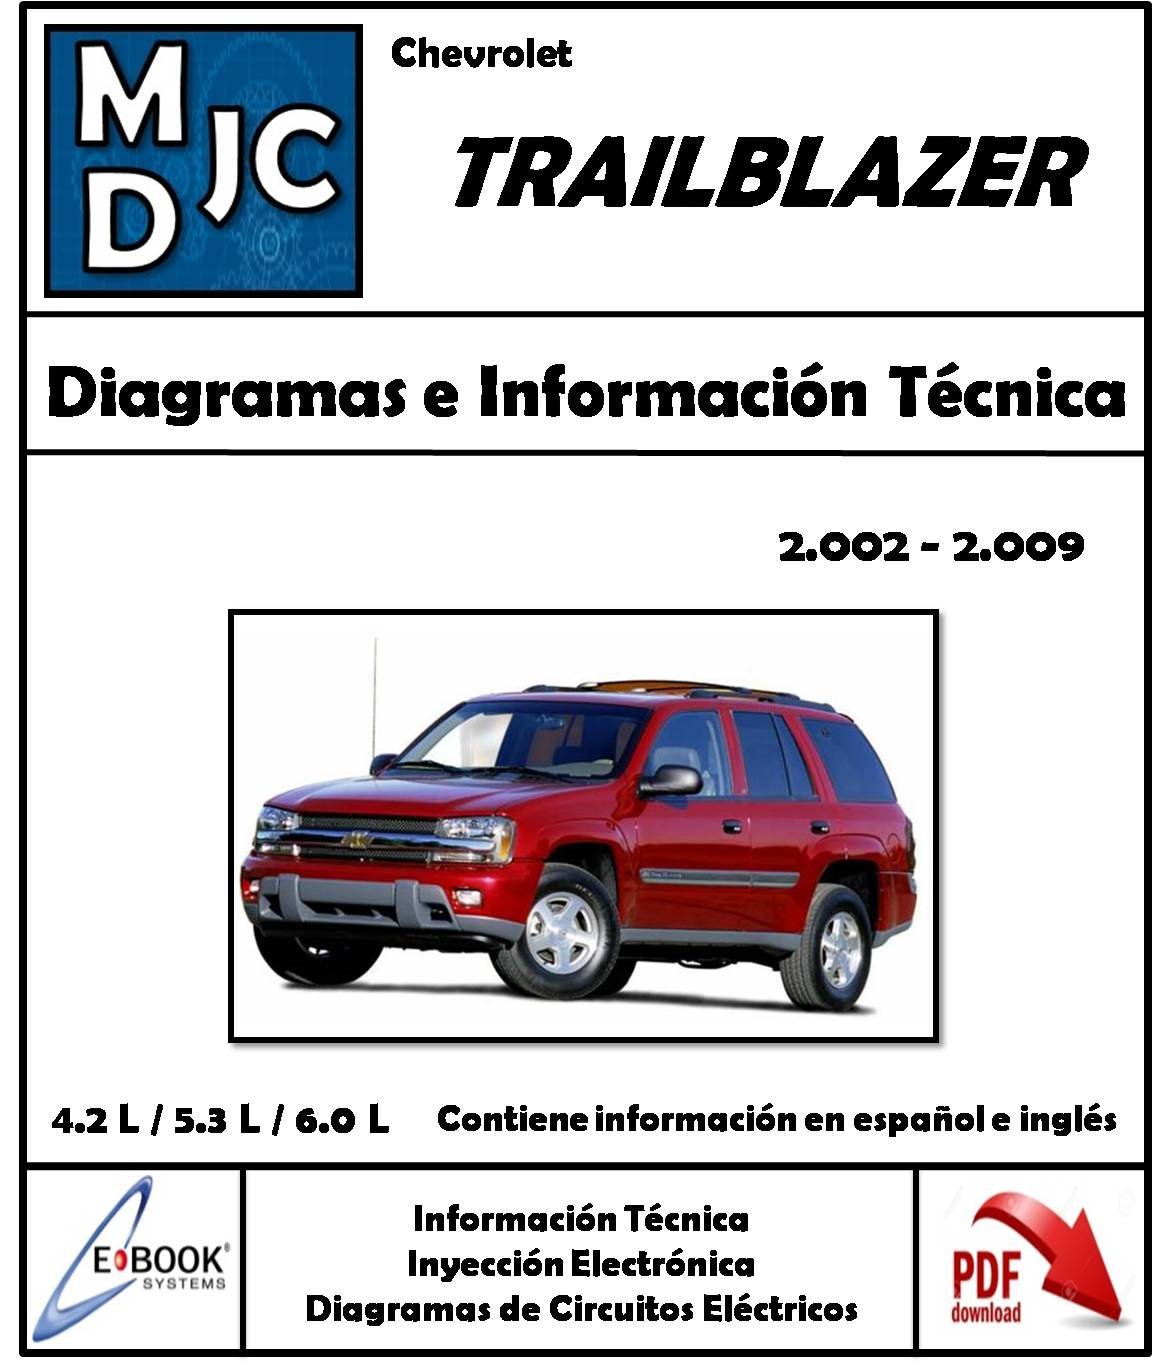 Chevrolet Trailblazer 4.2 L / 5.3 L / 6.0 L